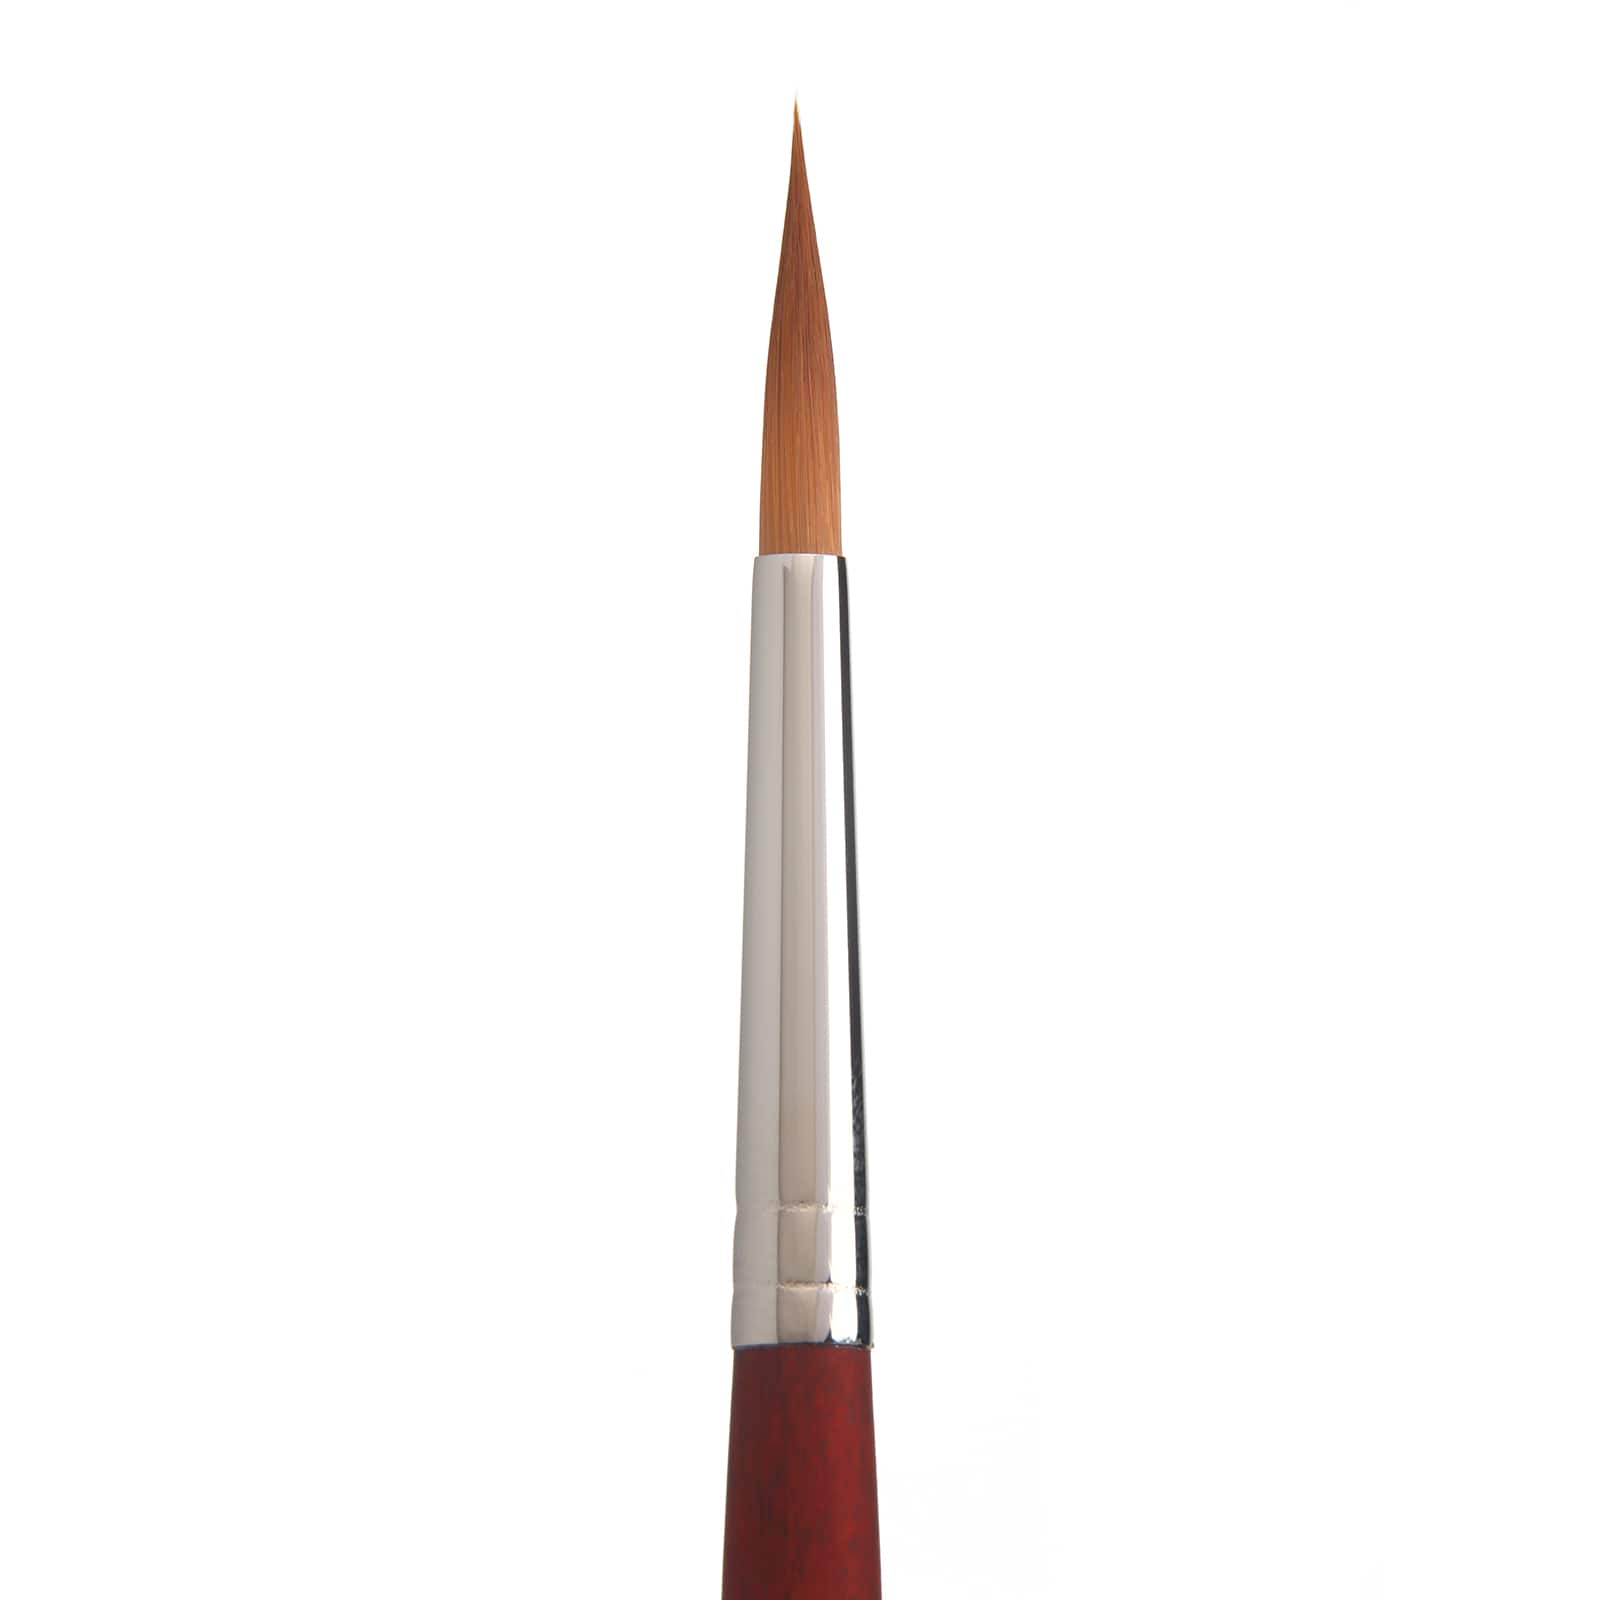 Princeton™ Velvetouch™ Series 3950 Long Round Brush